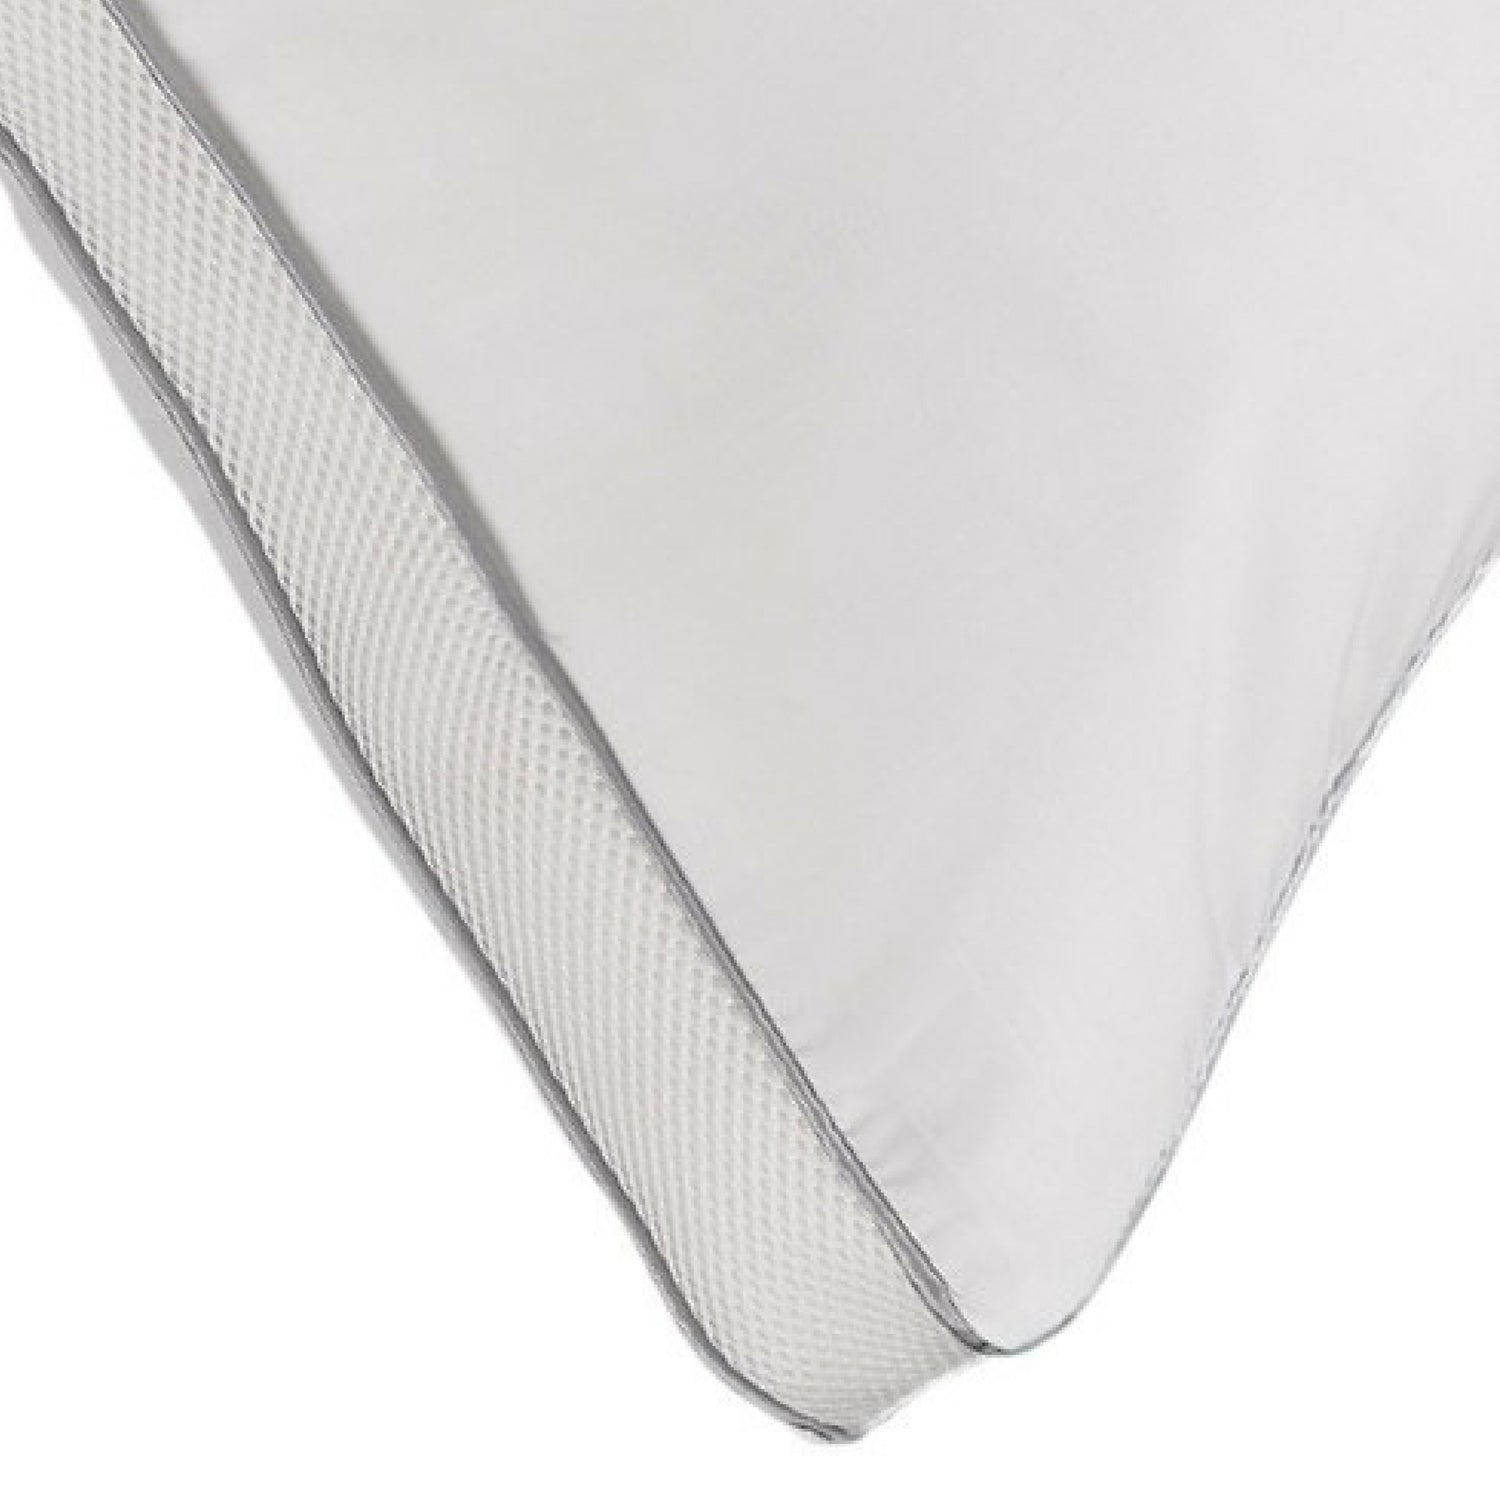 Ella Jayne Home Soft Exquisite Hotel Pillows Luxury Plush Gel